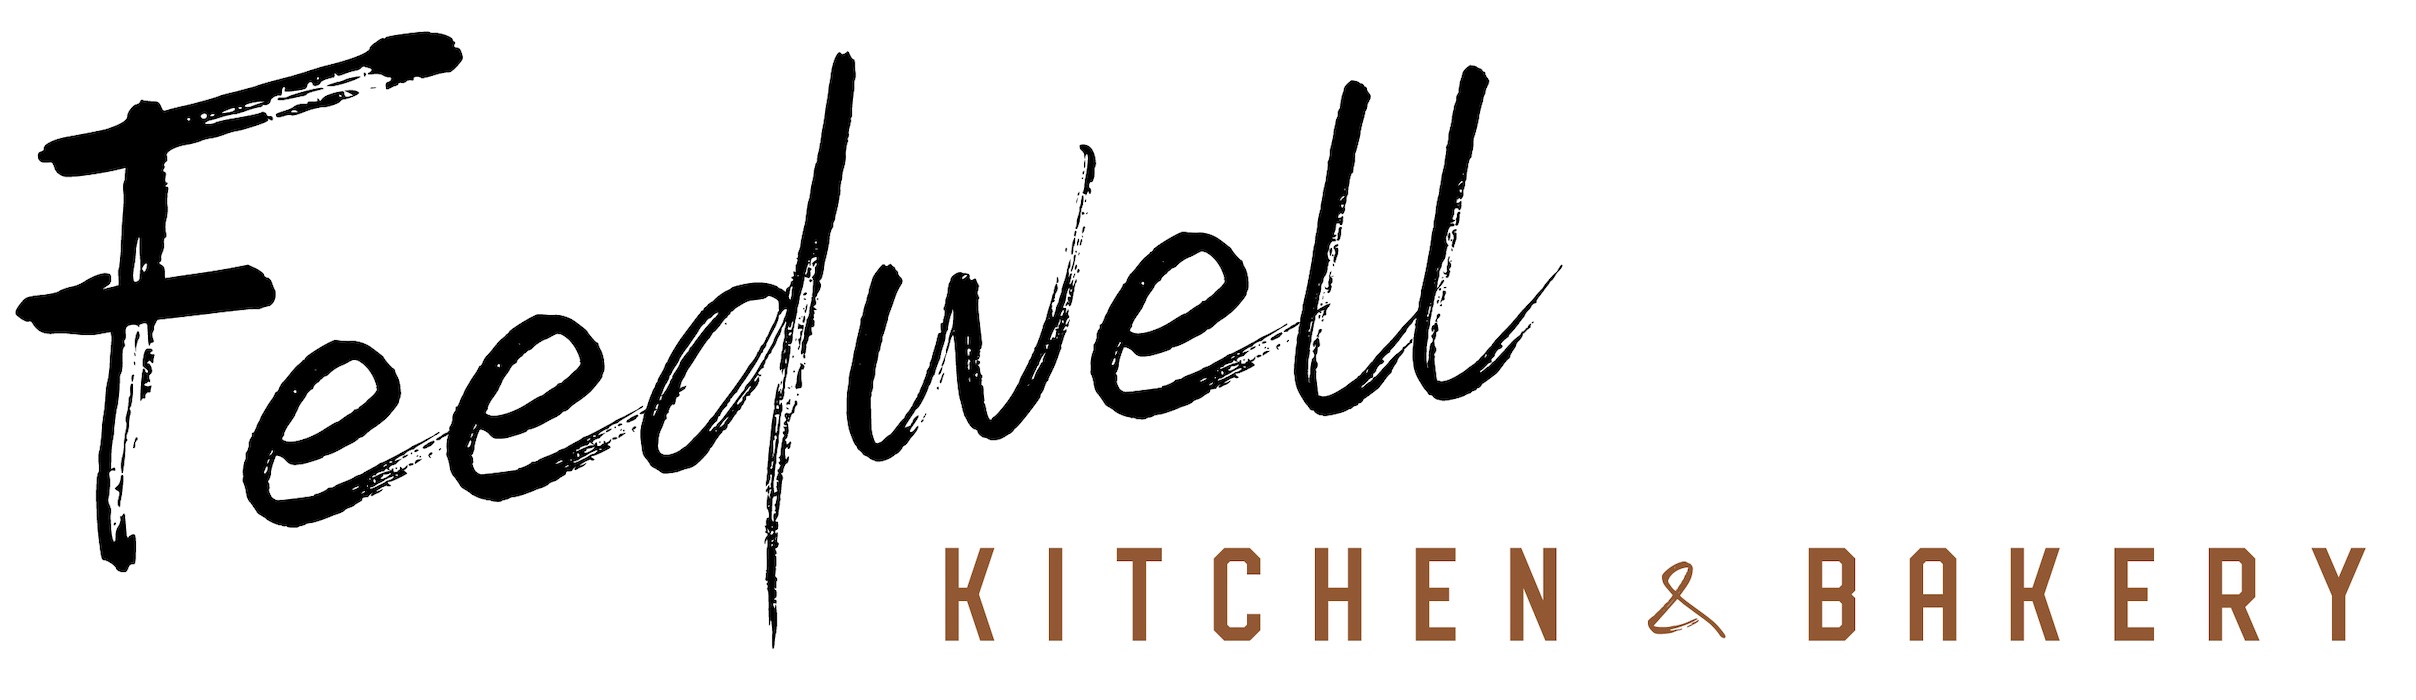 Feedwell Kitchen & Bakery Logo